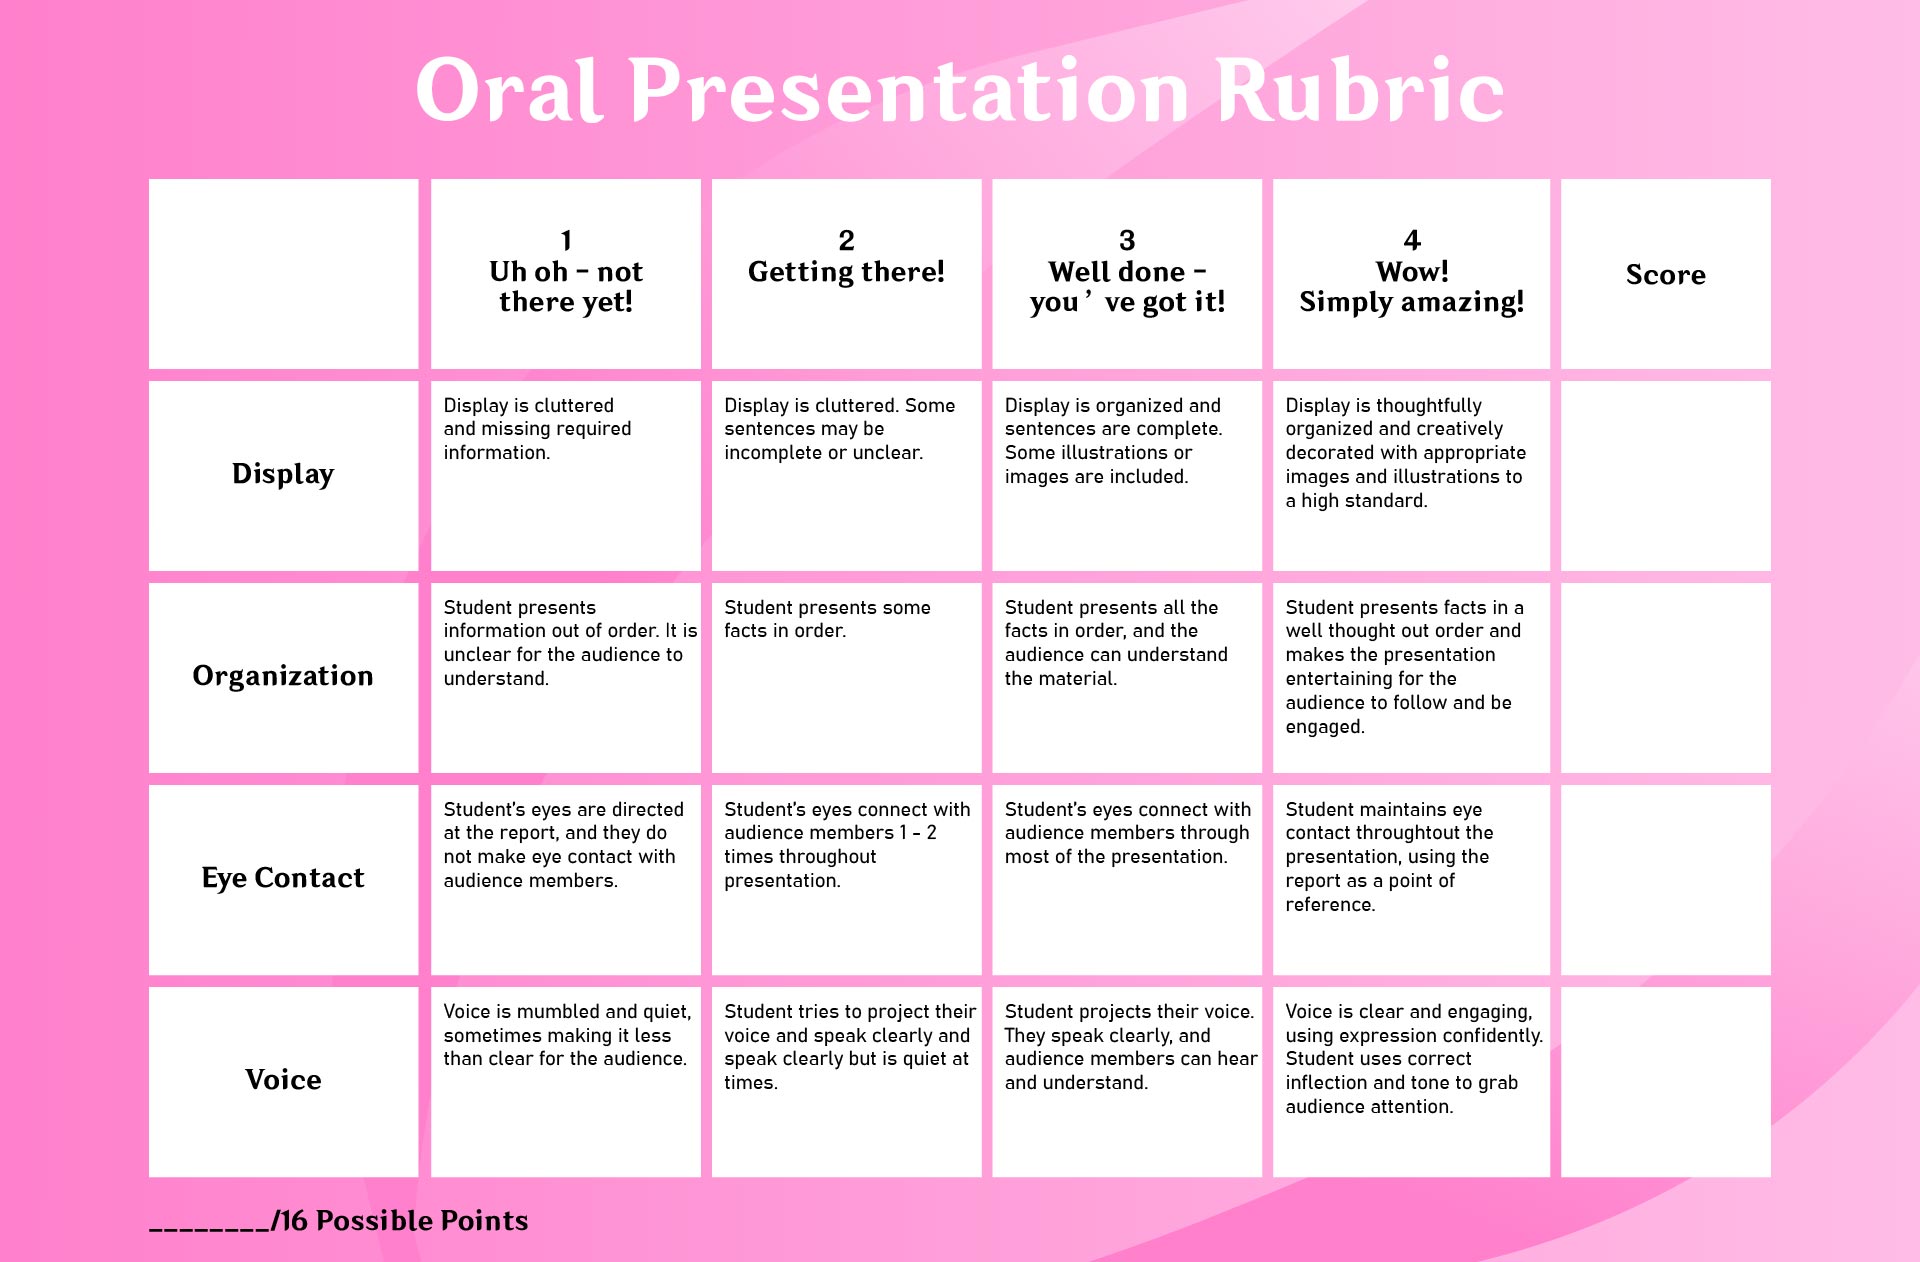 oral presentation analytic rubric